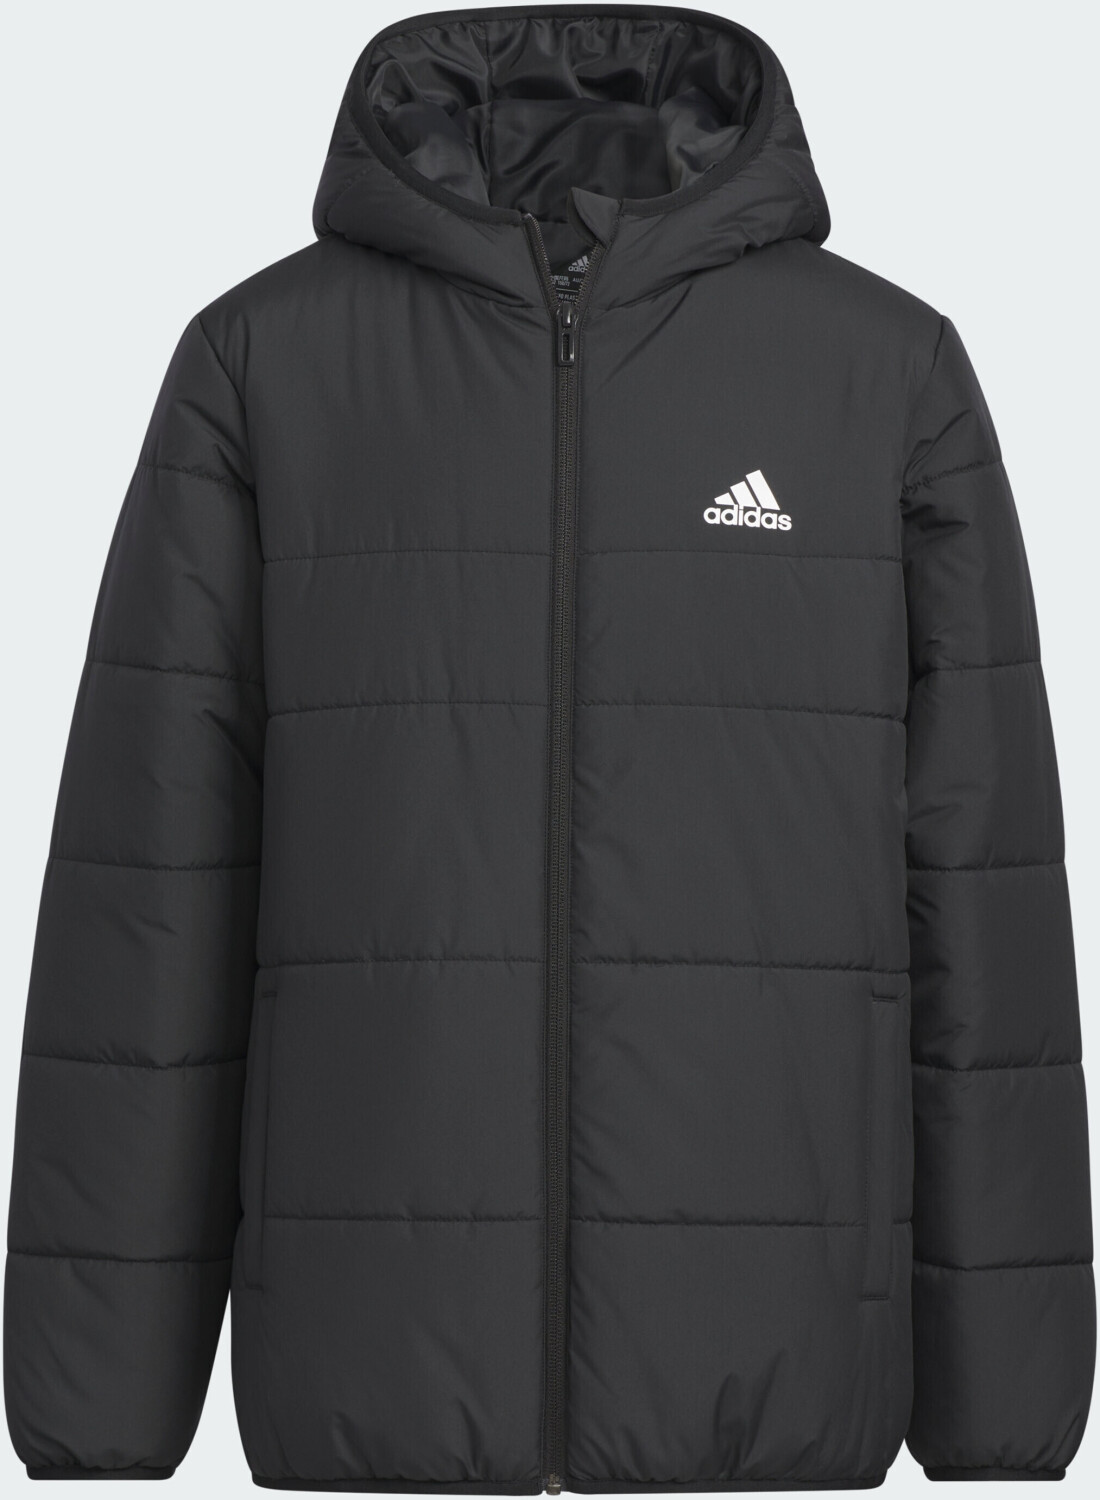 Adidas Padded Kids Jacket black (IL6073) ab € 44,80 | Preisvergleich bei